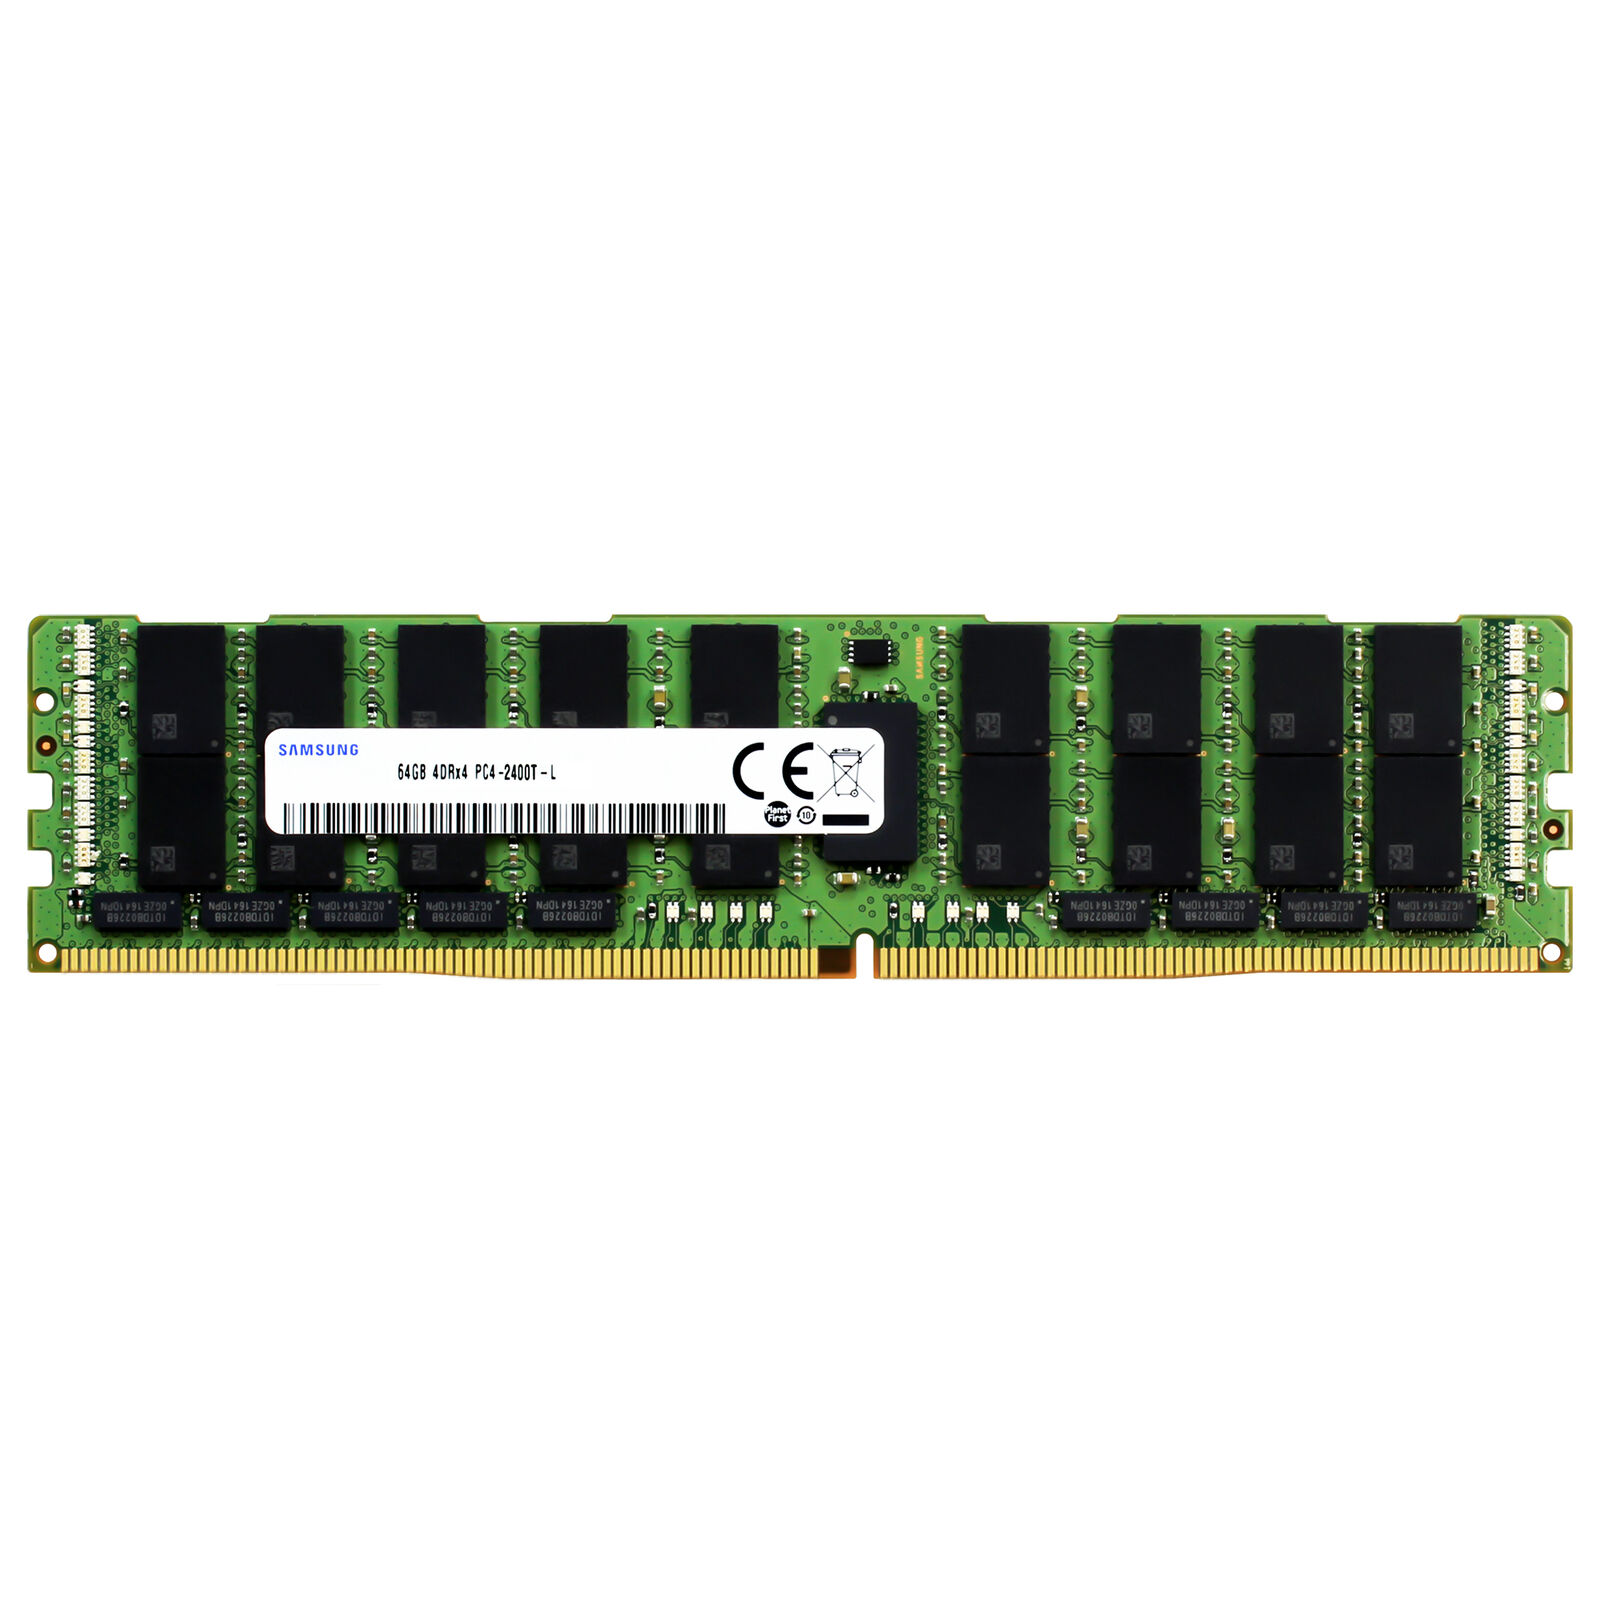 Samsung 64GB 4DRx4 PC4-2400 LRDIMM DDR4-19200 ECC Load Reduced Server Memory RAM